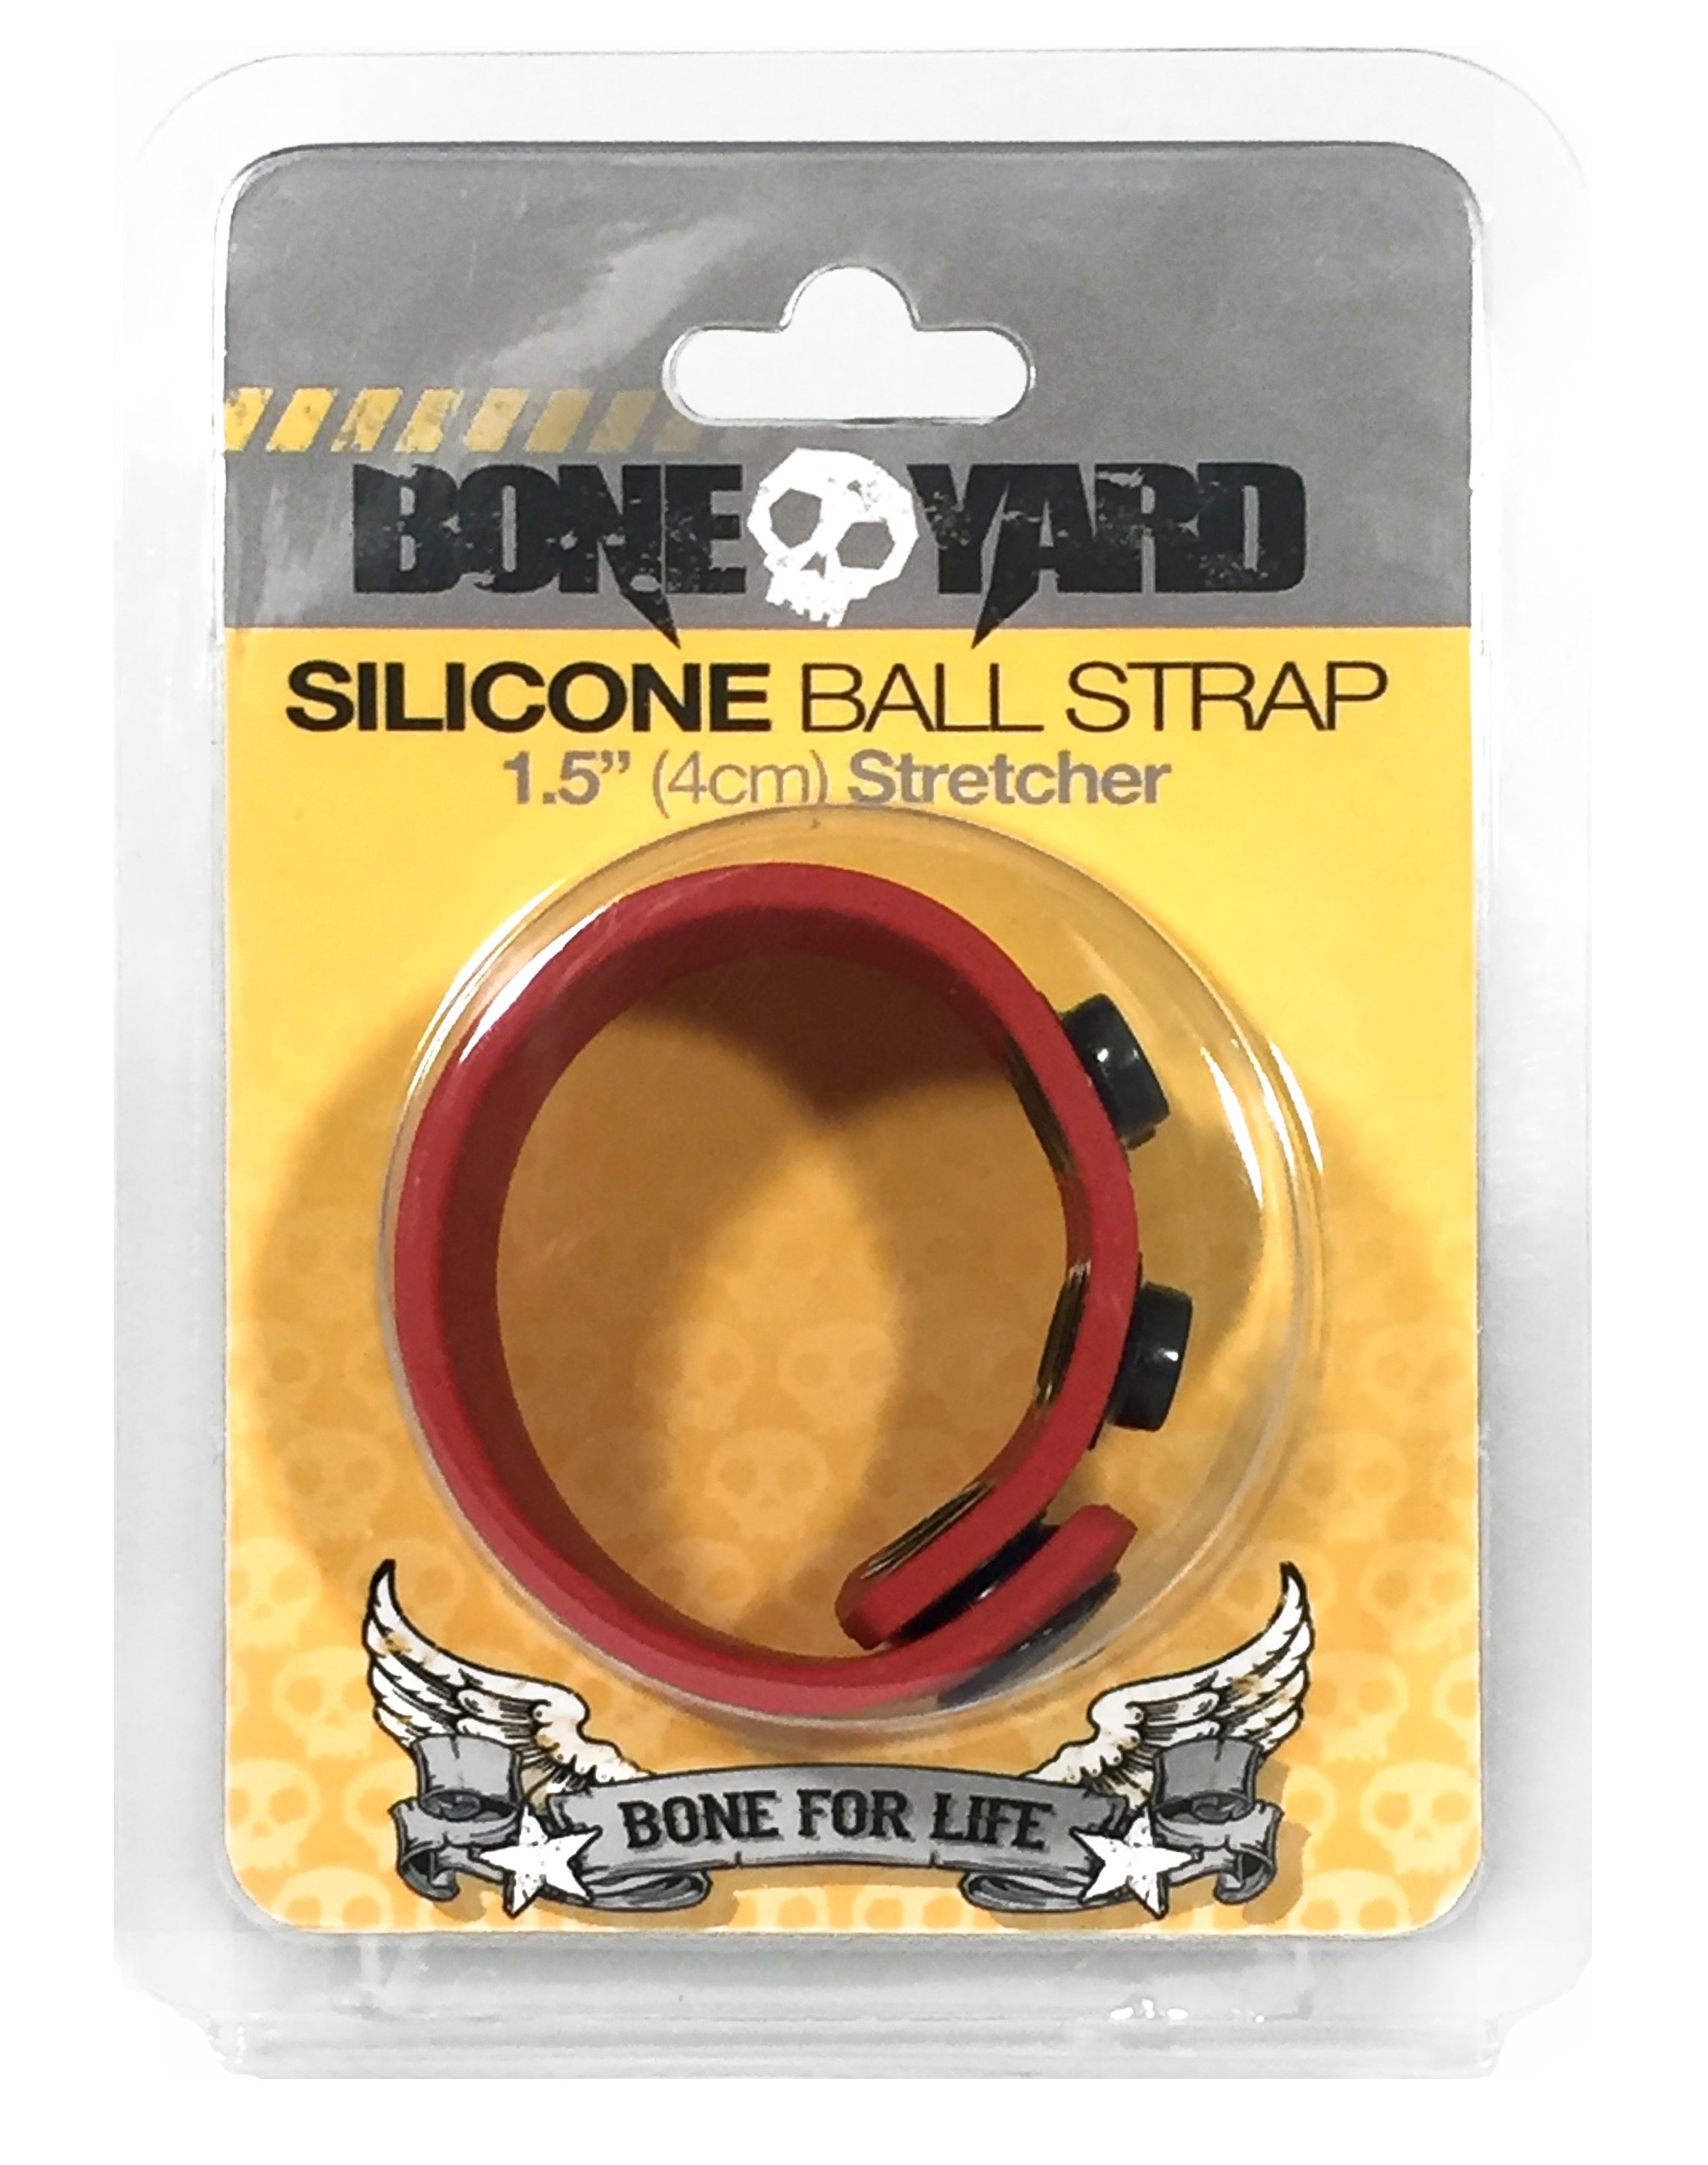 boneyard silicone ball strap cm stretcher red 